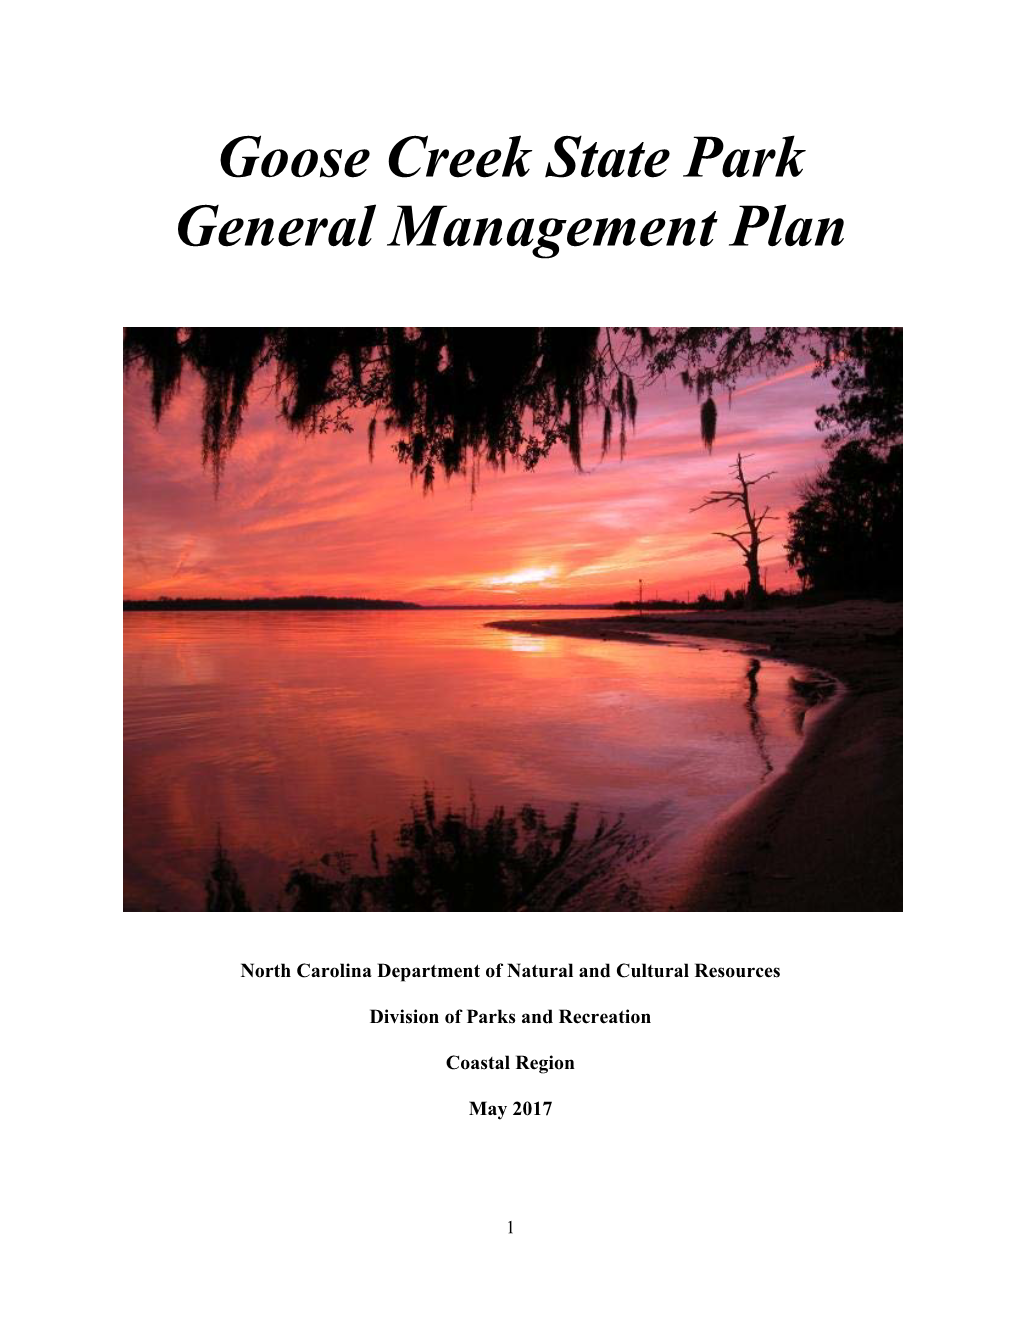 Goose Creek State Park General Management Plan